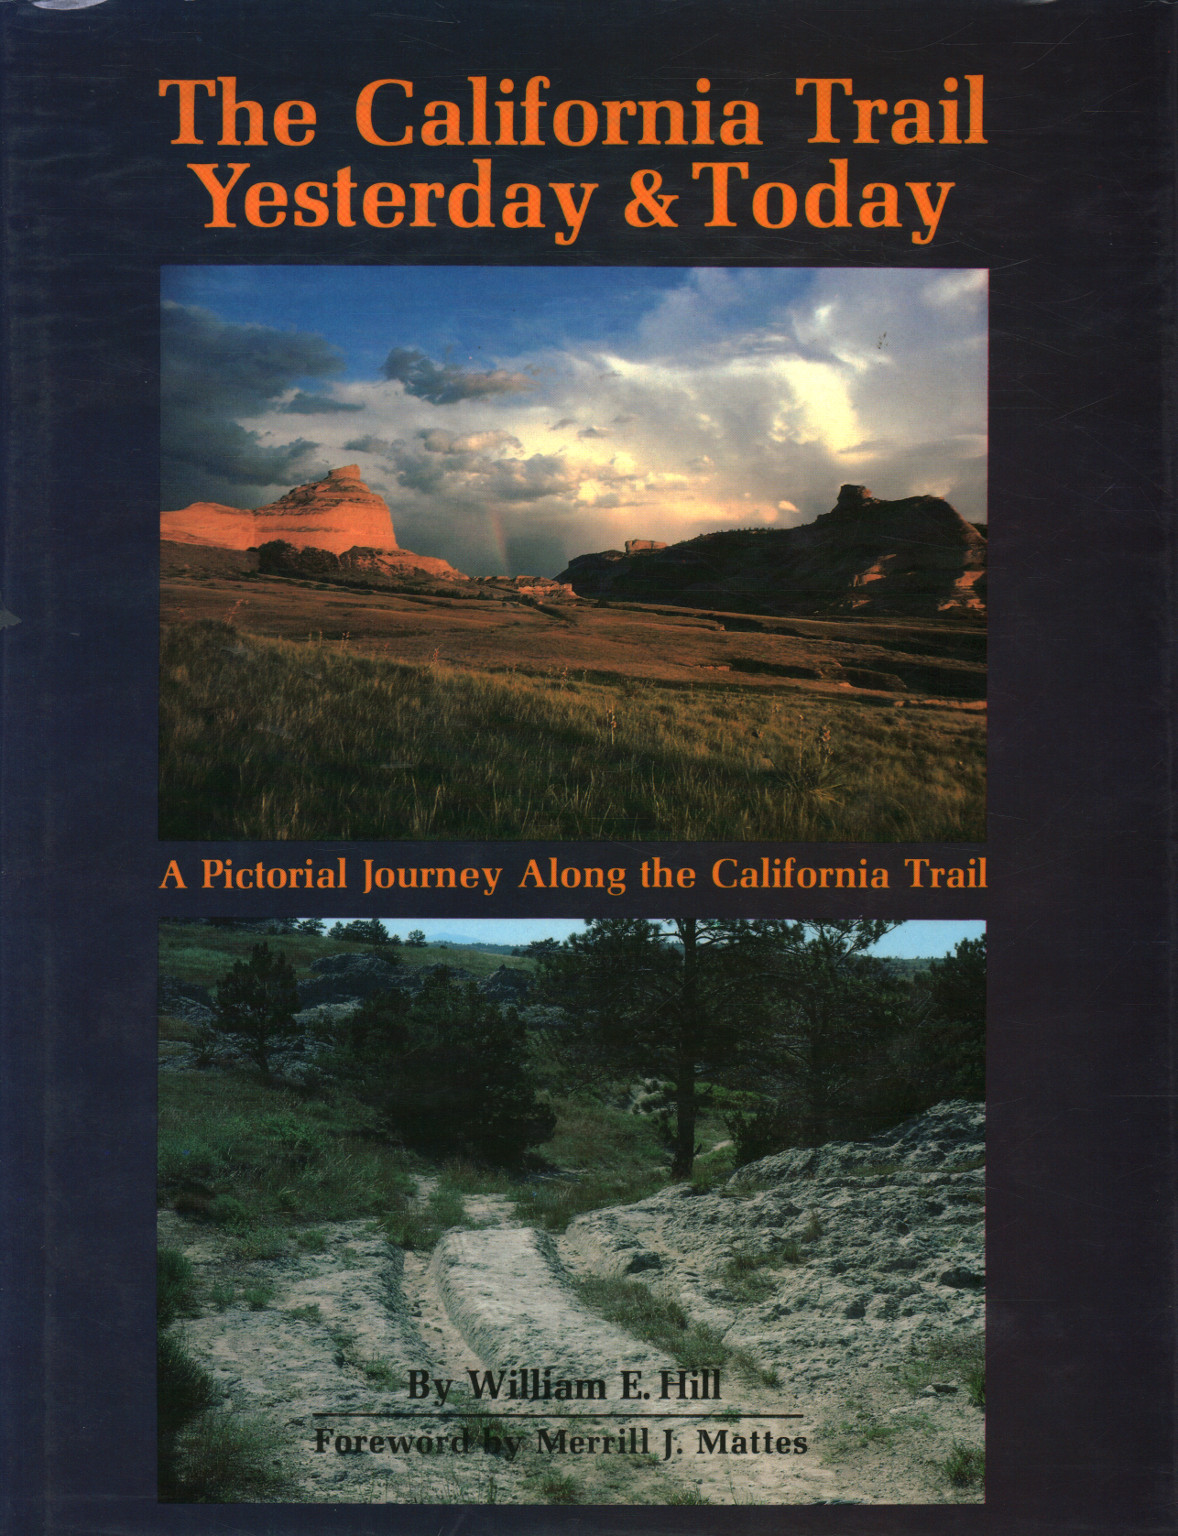 The California Trail Yesterday & Today, William E.Hill